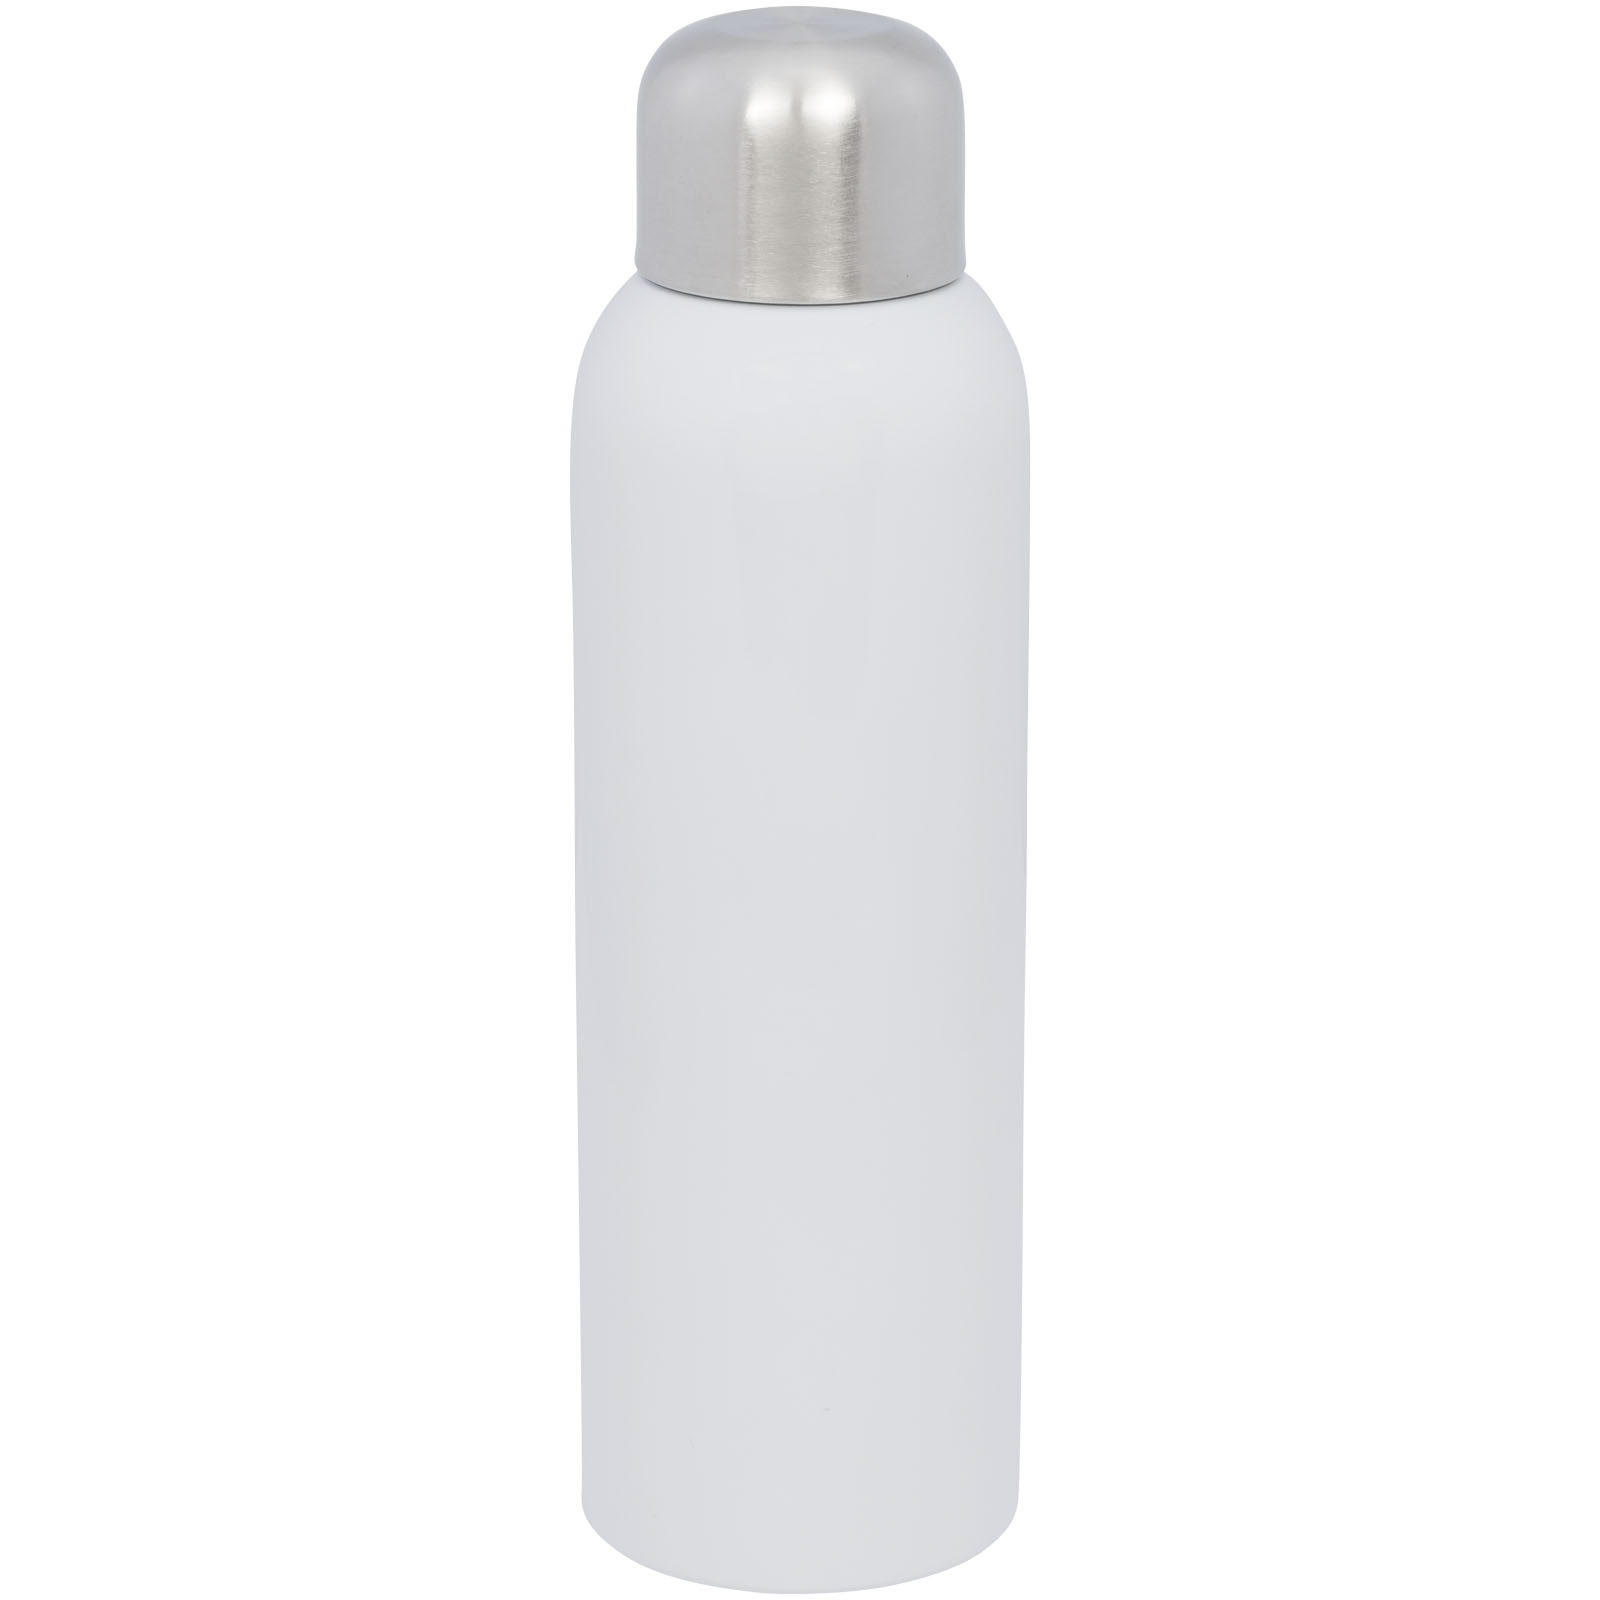 Advertising Water bottles - Guzzle 820 ml RCS certified stainless steel water bottle - 0